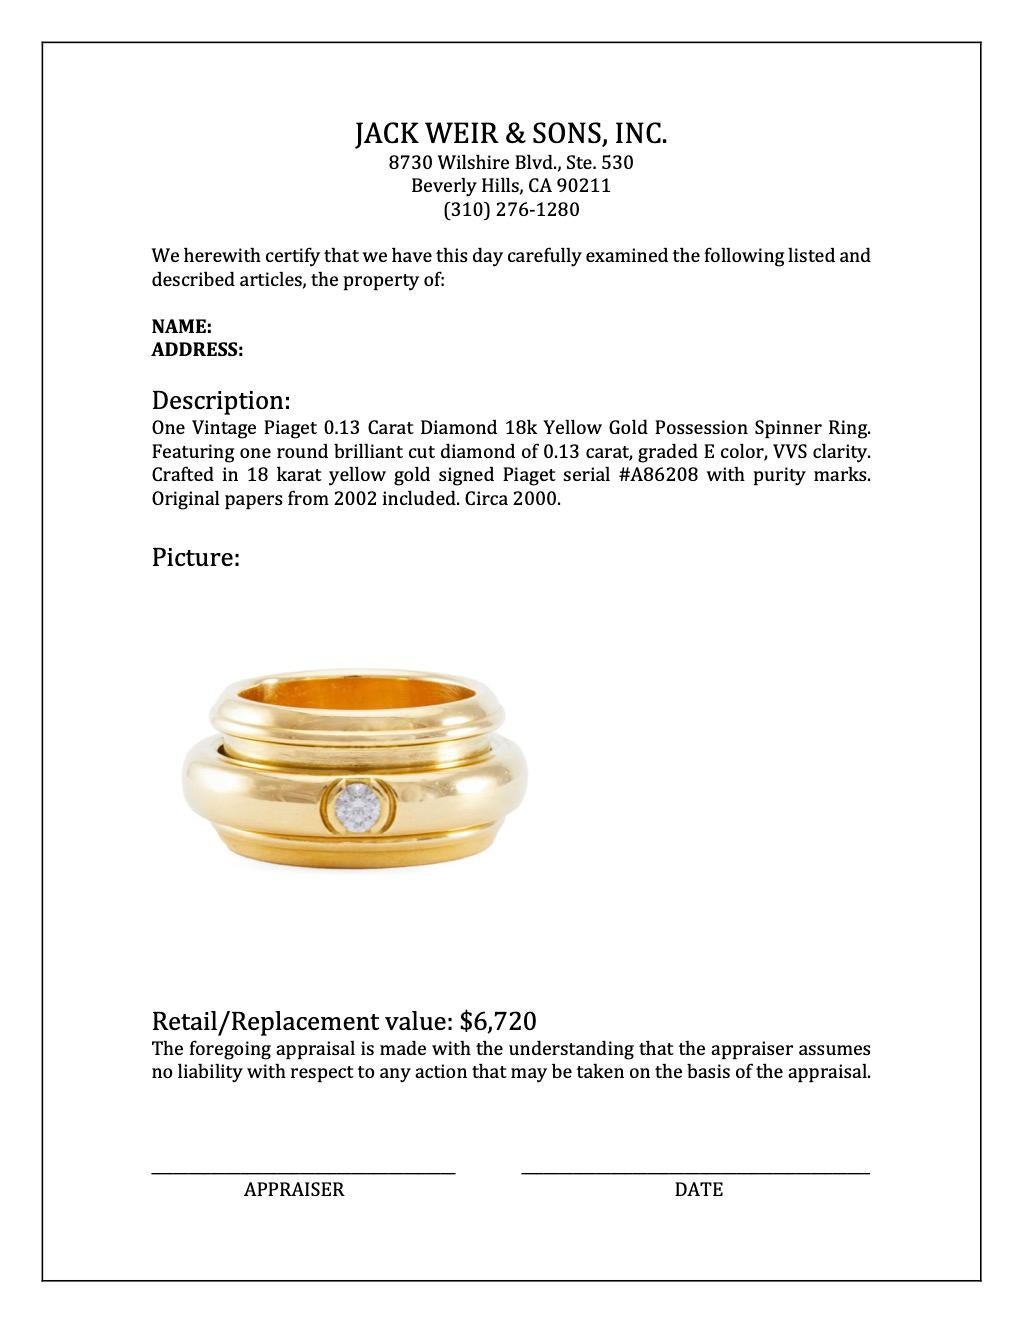 Vintage Piaget 0.13 Carat Diamond 18k Yellow Gold Possession Spinner Ring 1